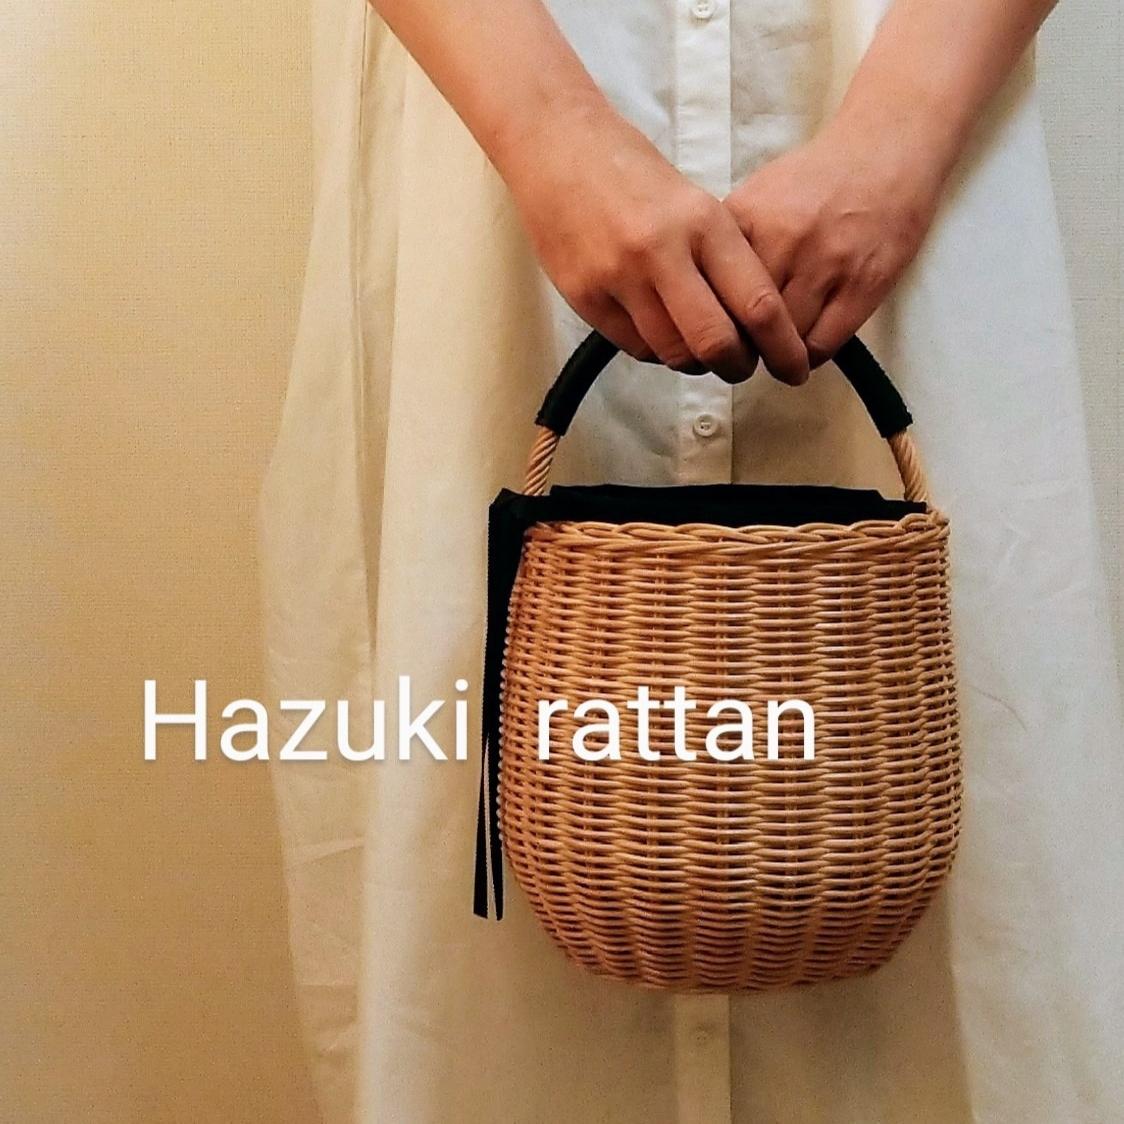 hazuki rattanの画像